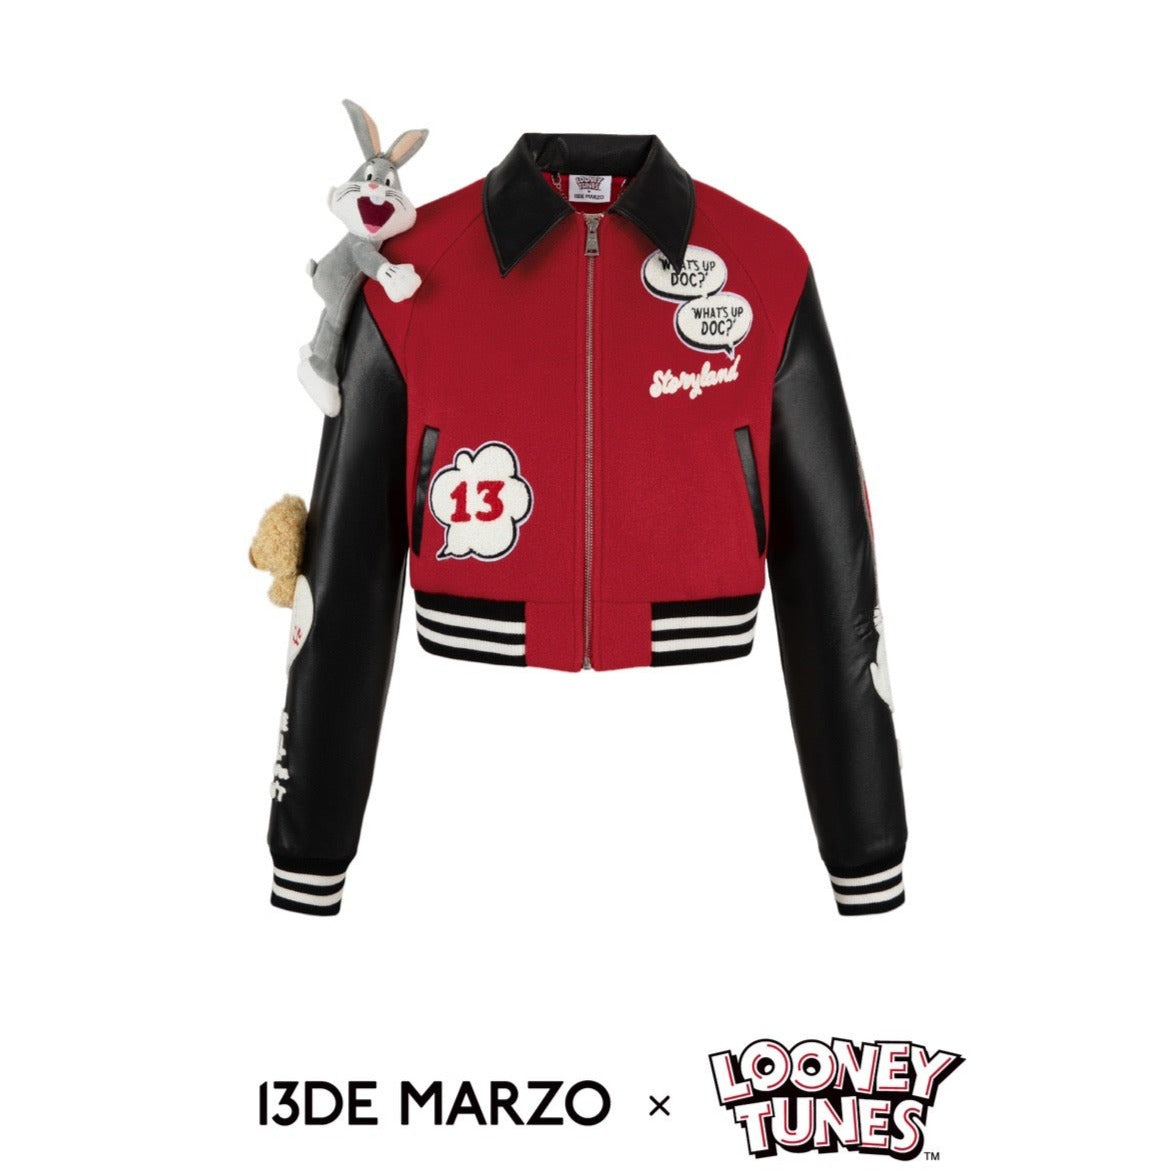 13DE MARZO x LOONEY TUNES Bugs Bunny Racing Jacket Lapis Blue